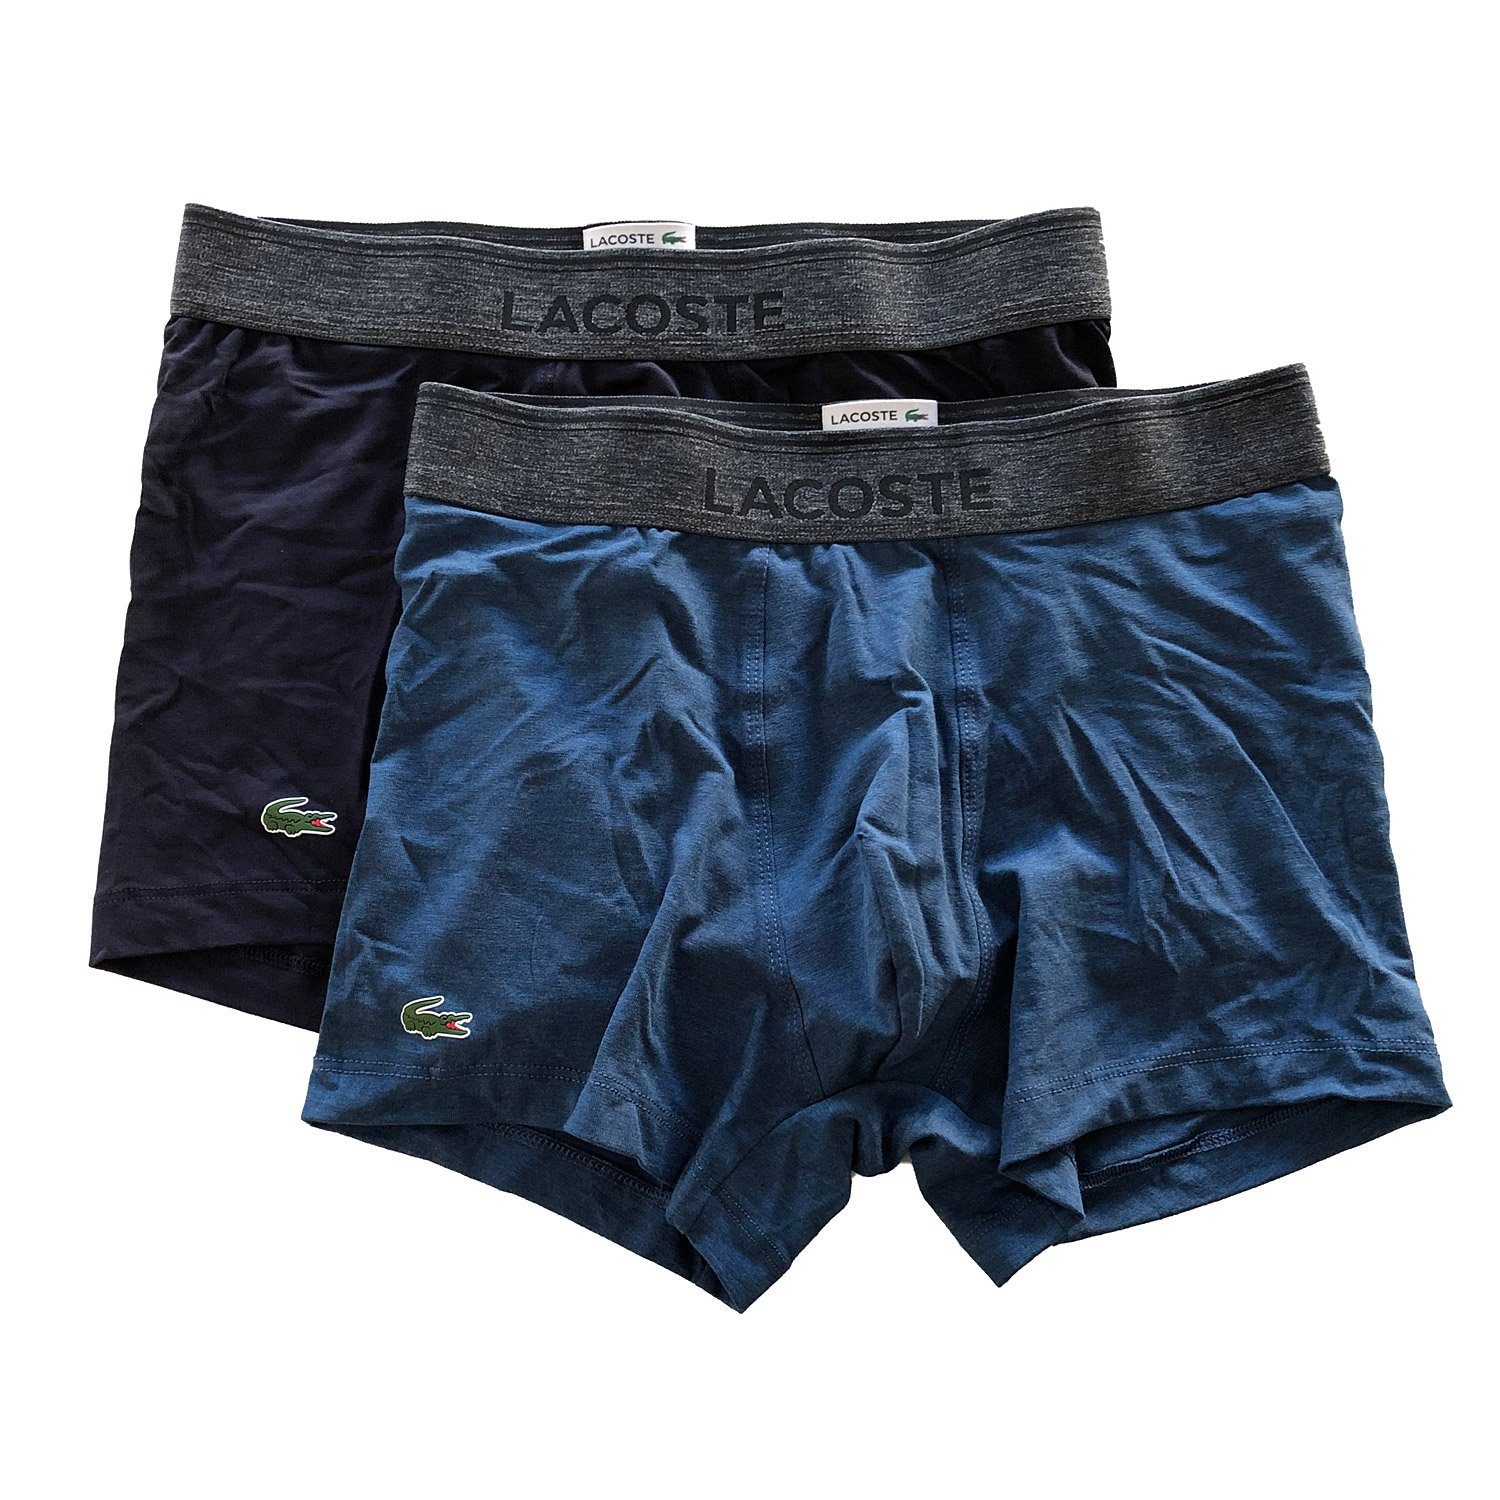 Serie Modal 2er-Pack) Bein Shorts 2-St., (Doppelpack, Lacoste im Unterhosen Doppelpack Modal Cotton Baumwolle kurzes dunkelblau-dunkelrot (909) Trunk